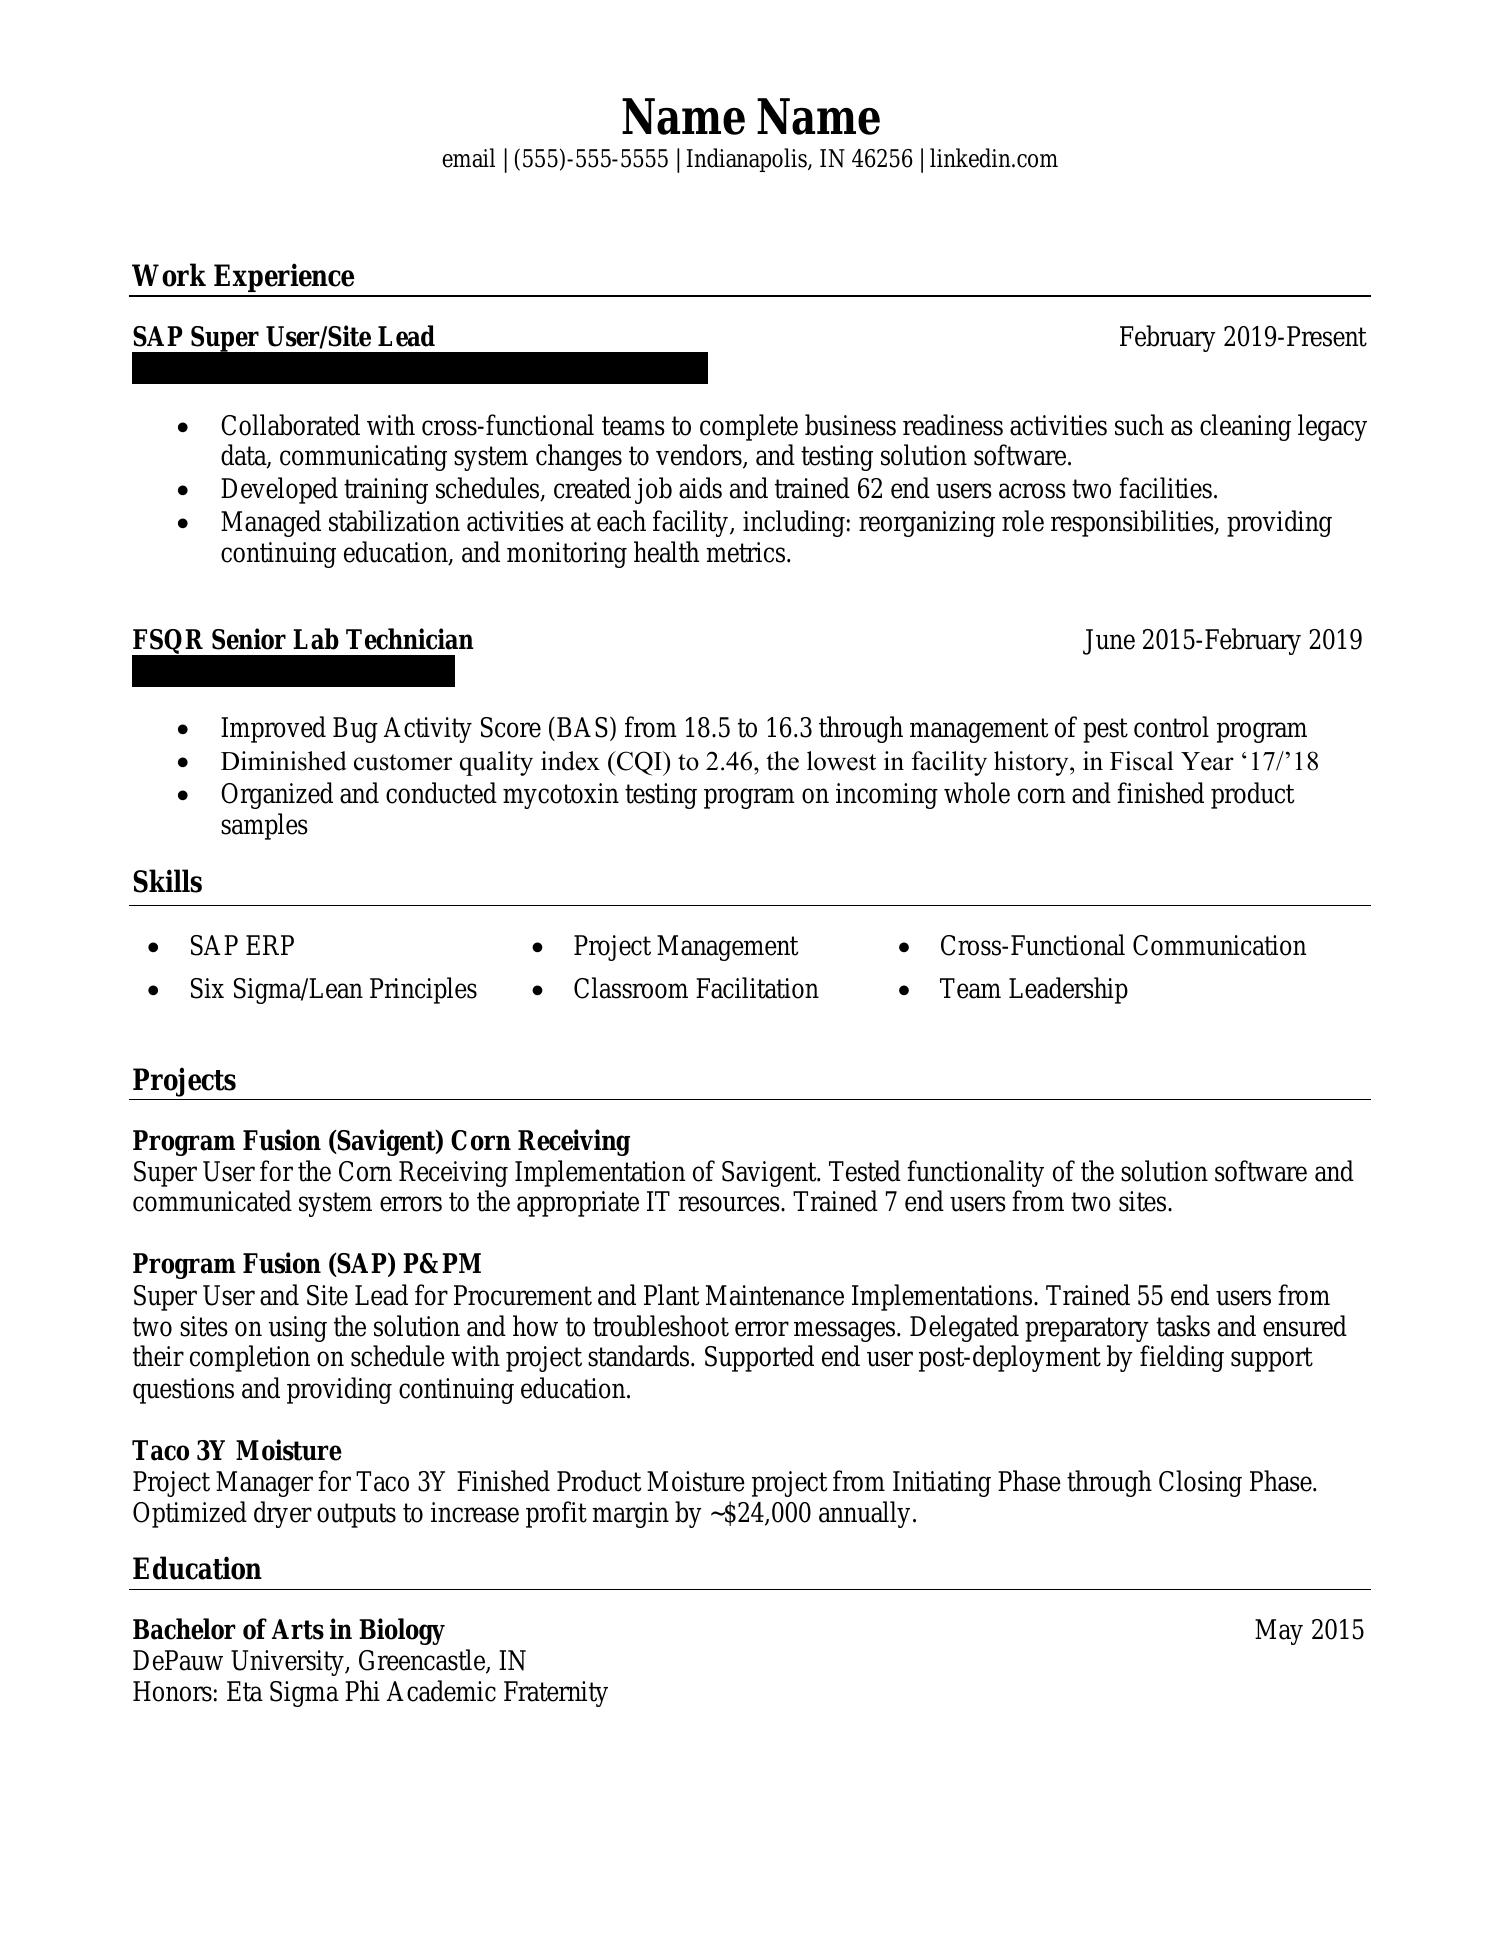 need help making a resume